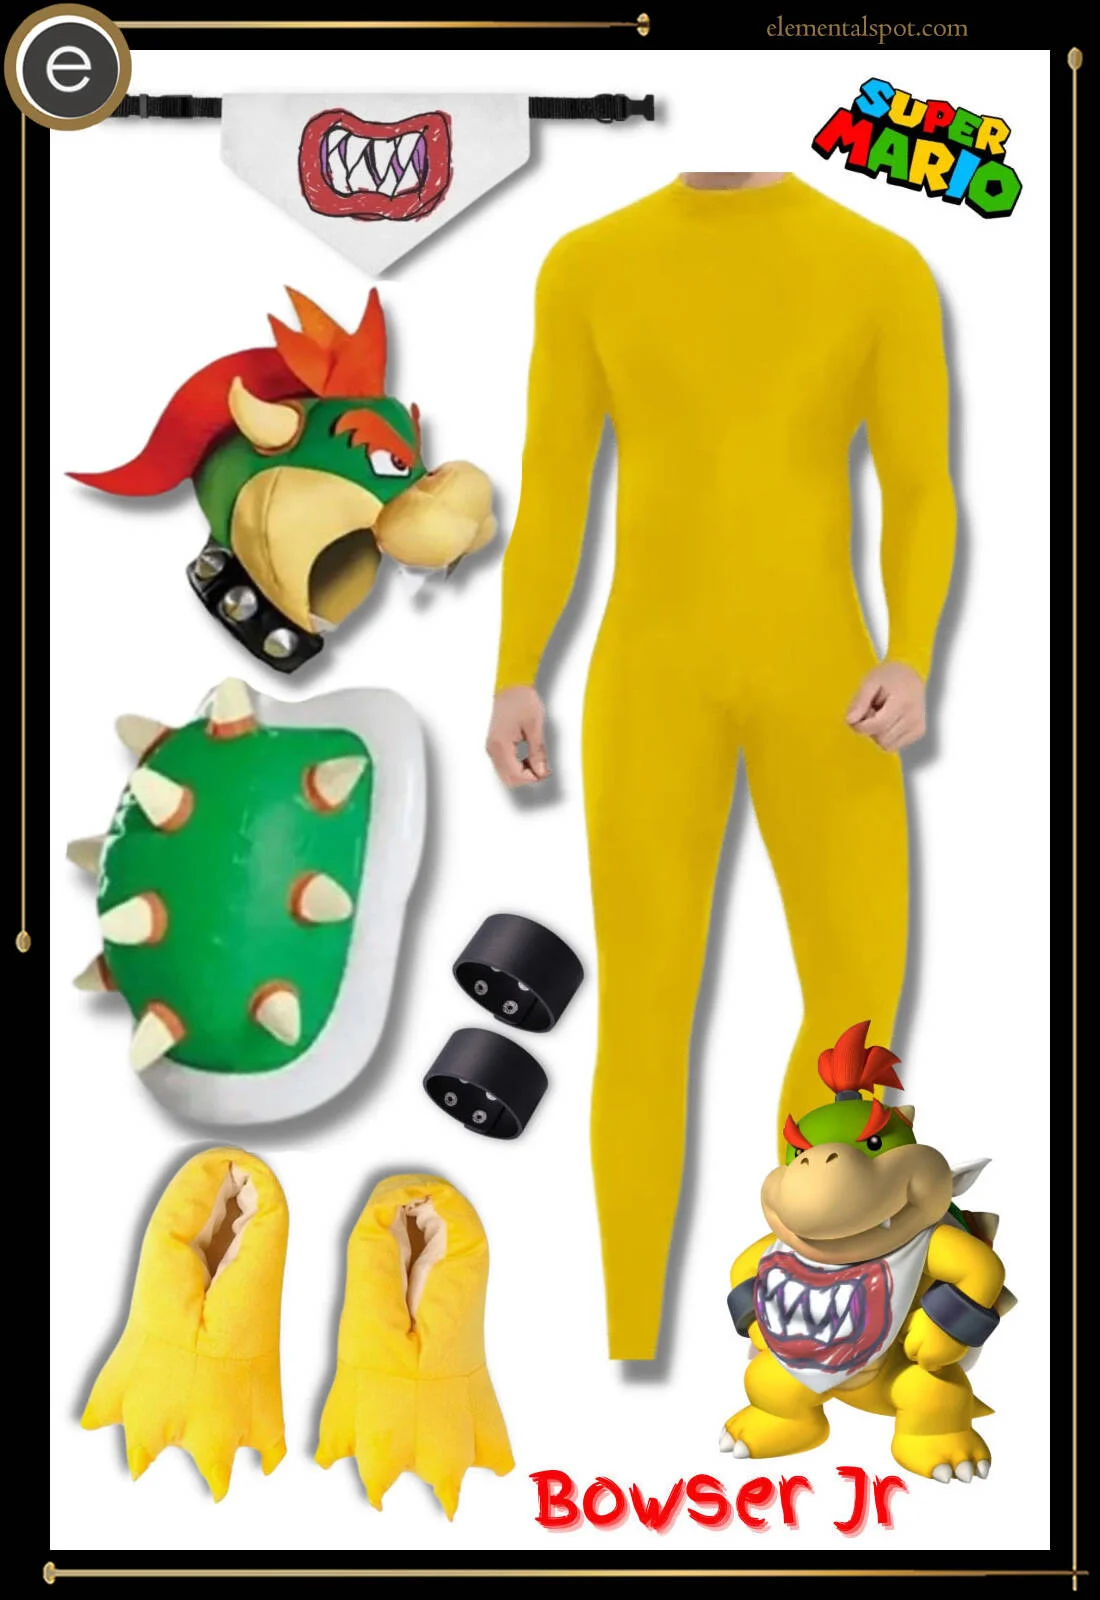 Dress Up Like Bowser Jr. from Super Mario - Elemental Spot